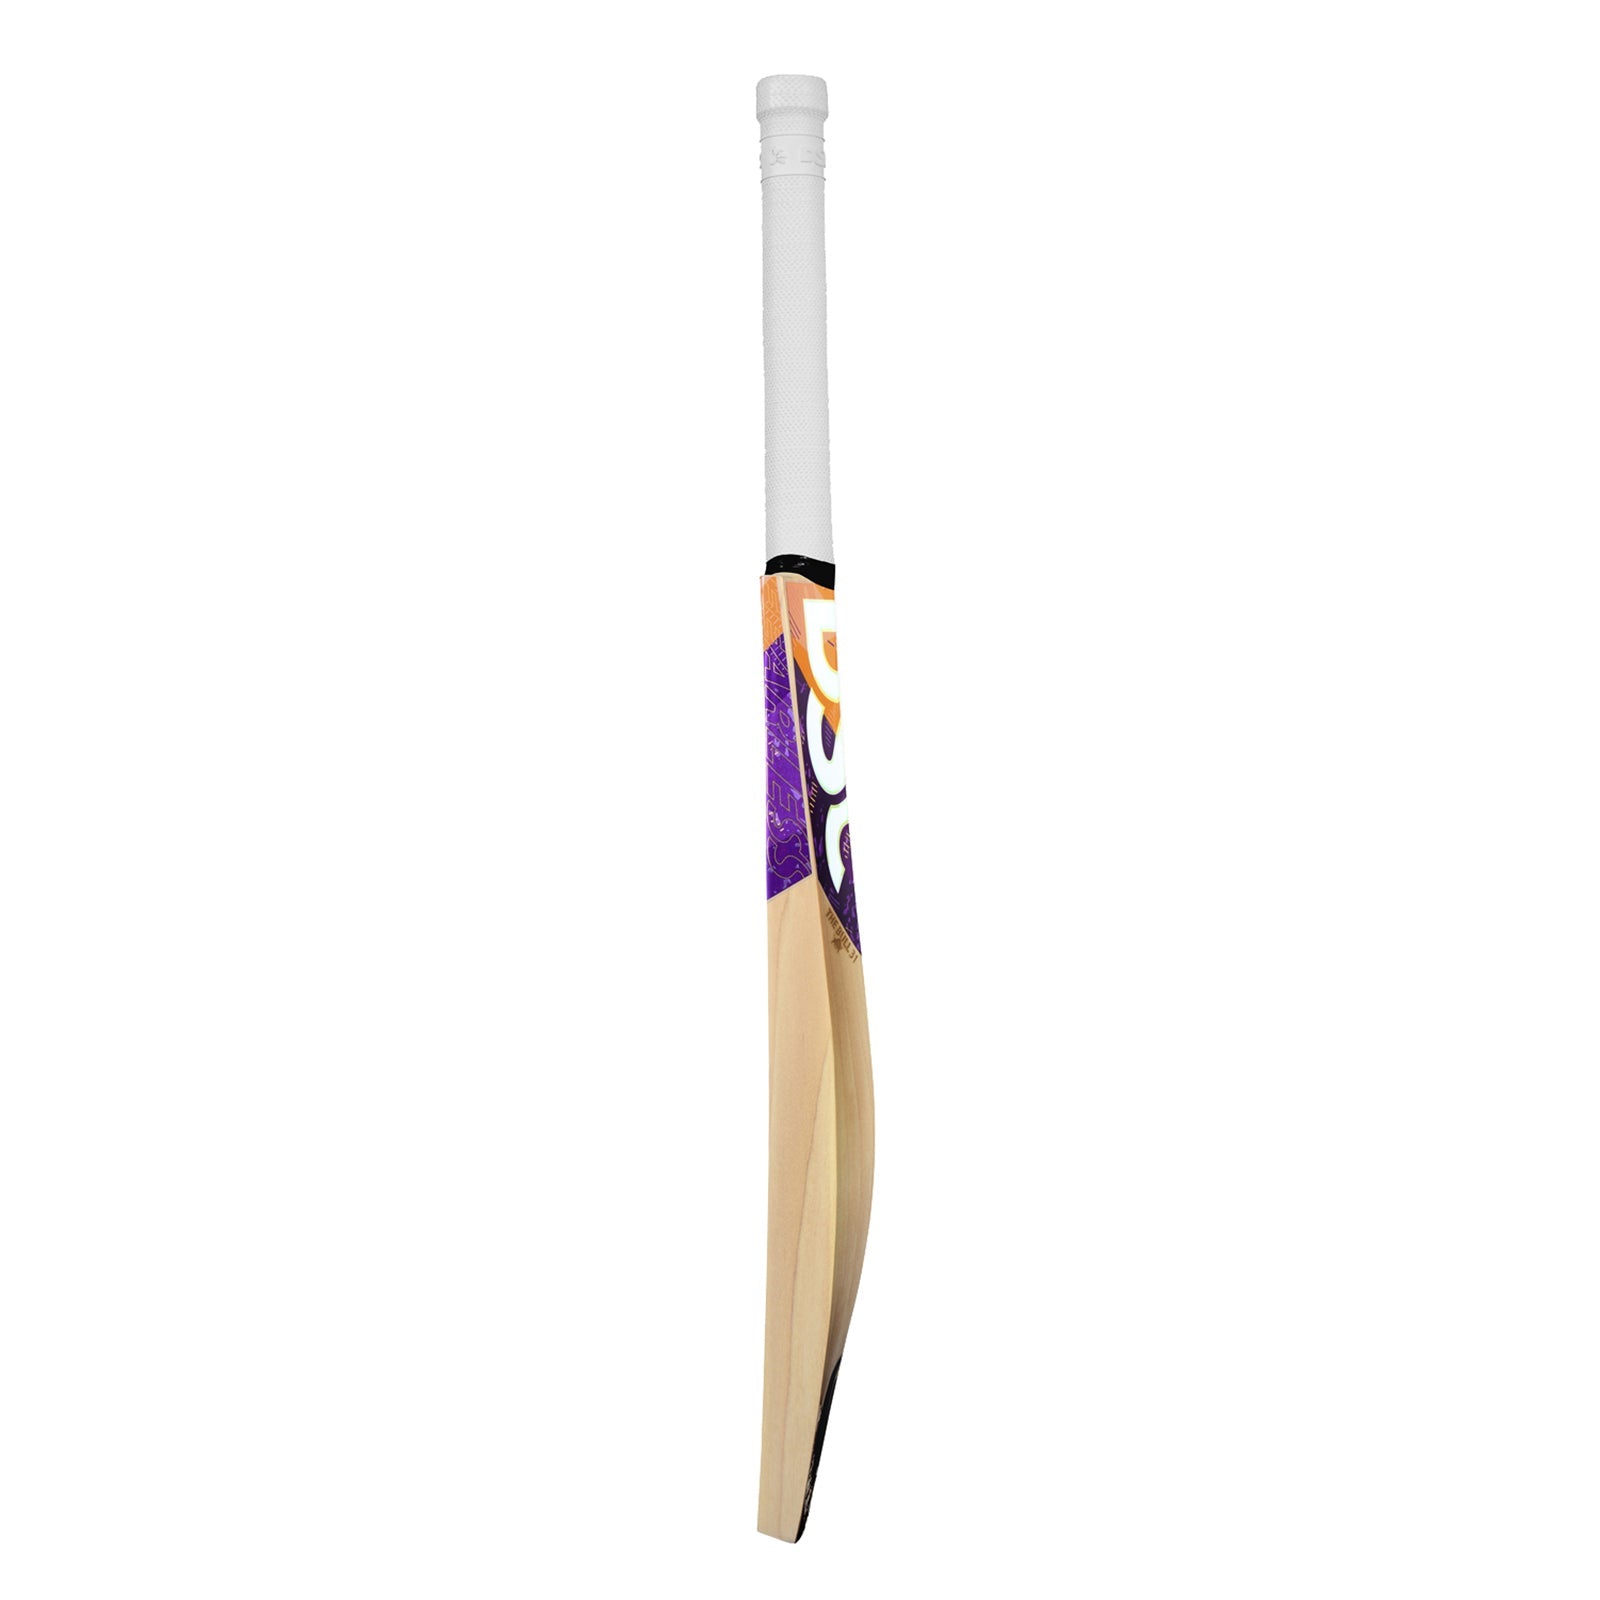 DSC Krunch The Bull 31 Player Edition Cricket Bat - Senior Long Blade